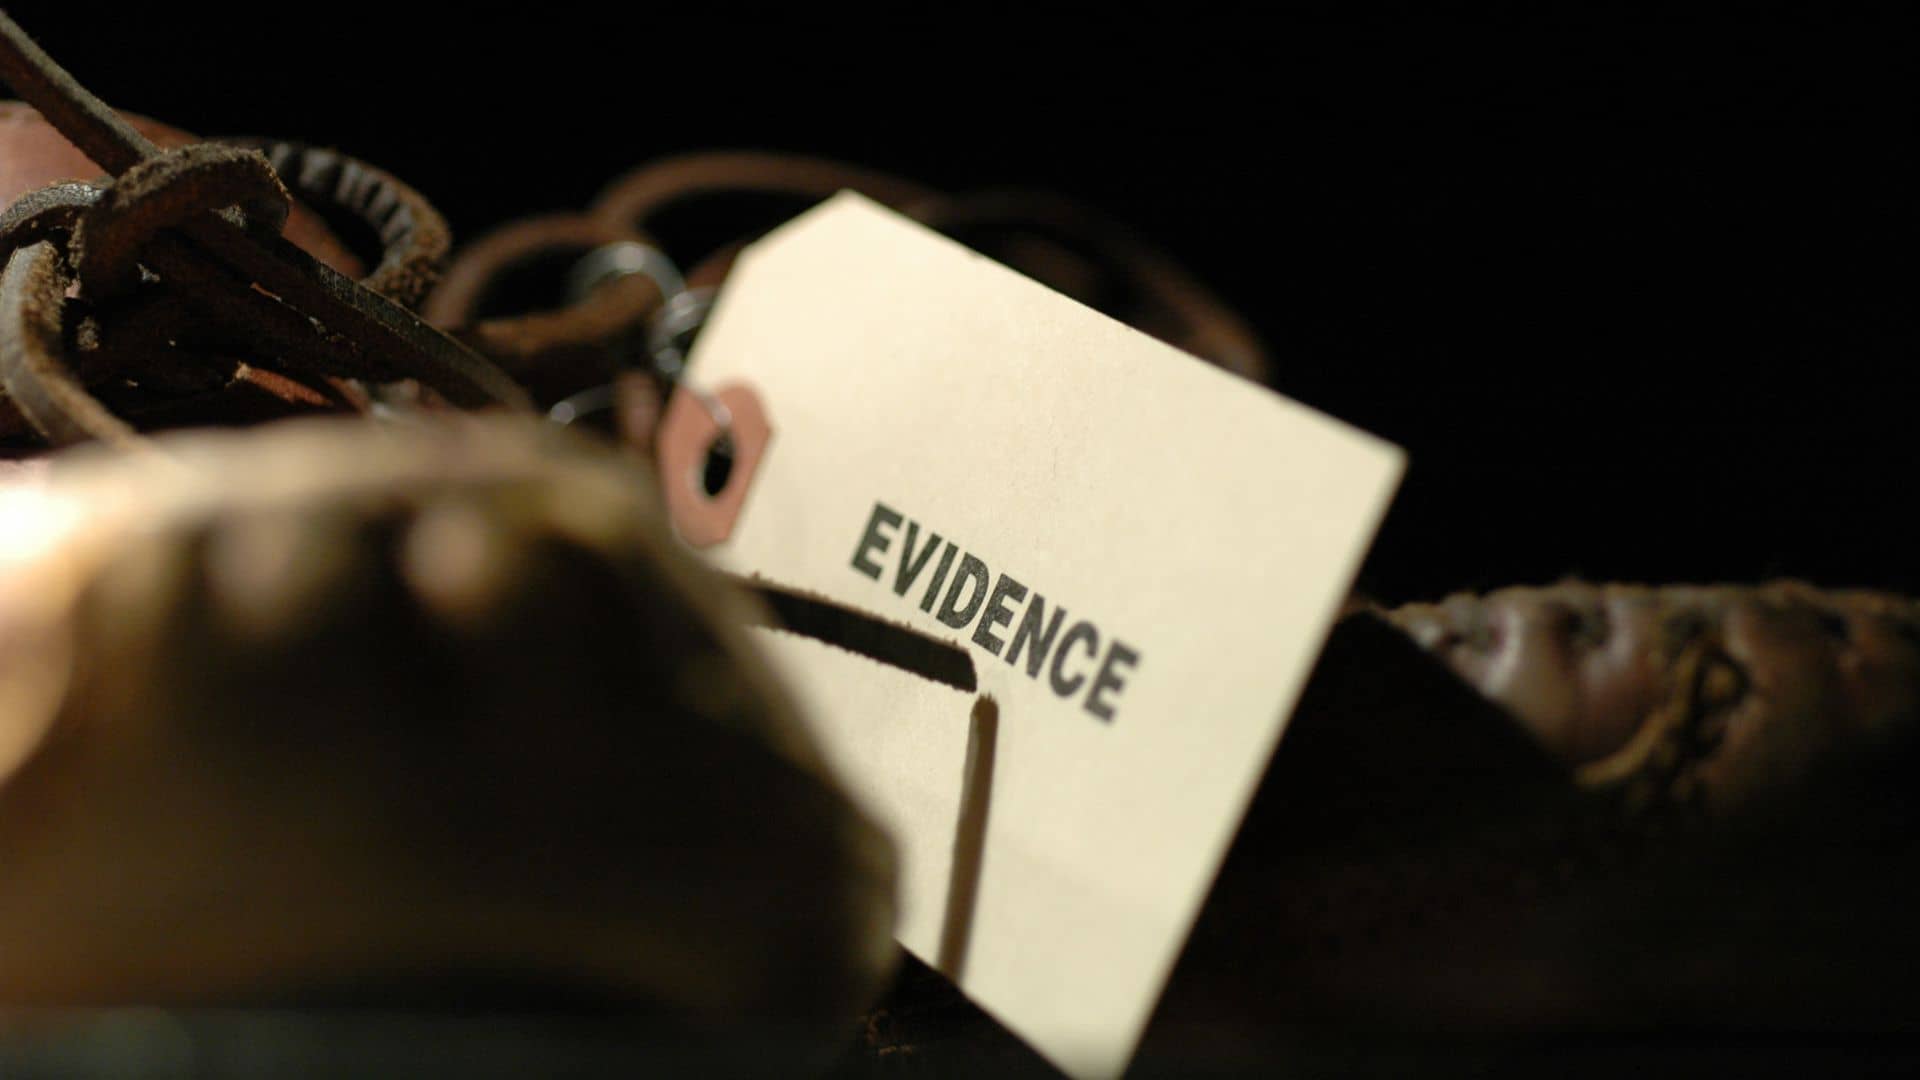 Physical Evidence vs. Testimonial Evidence